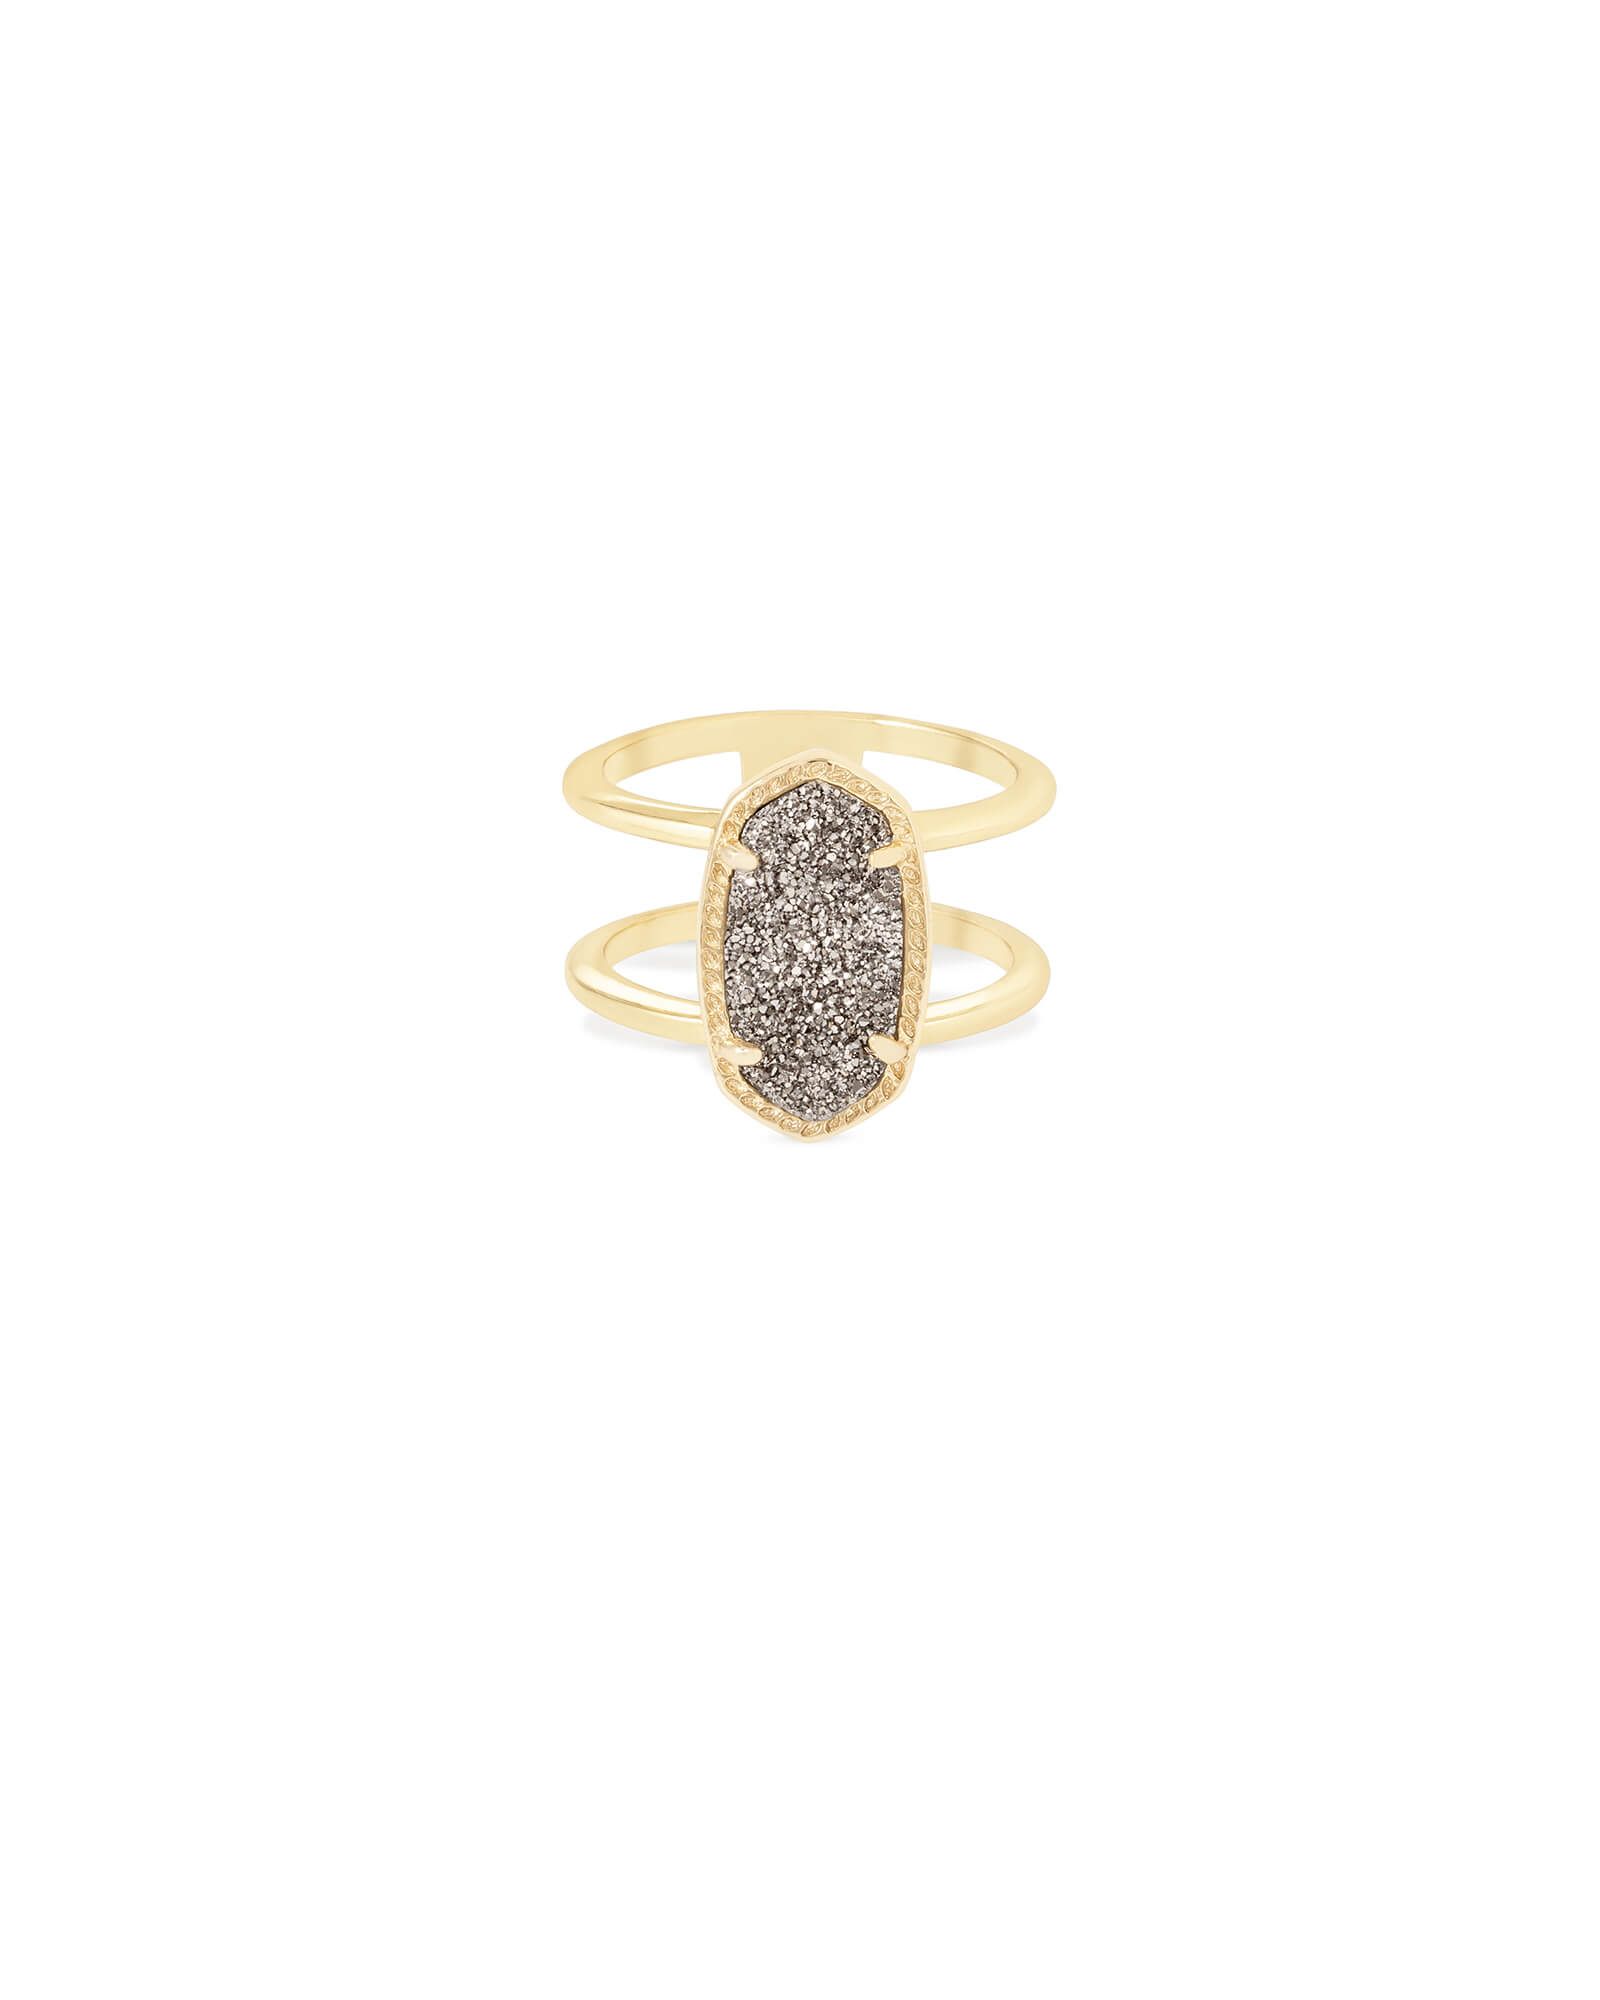 Elyse Ring in Gold | Kendra Scott